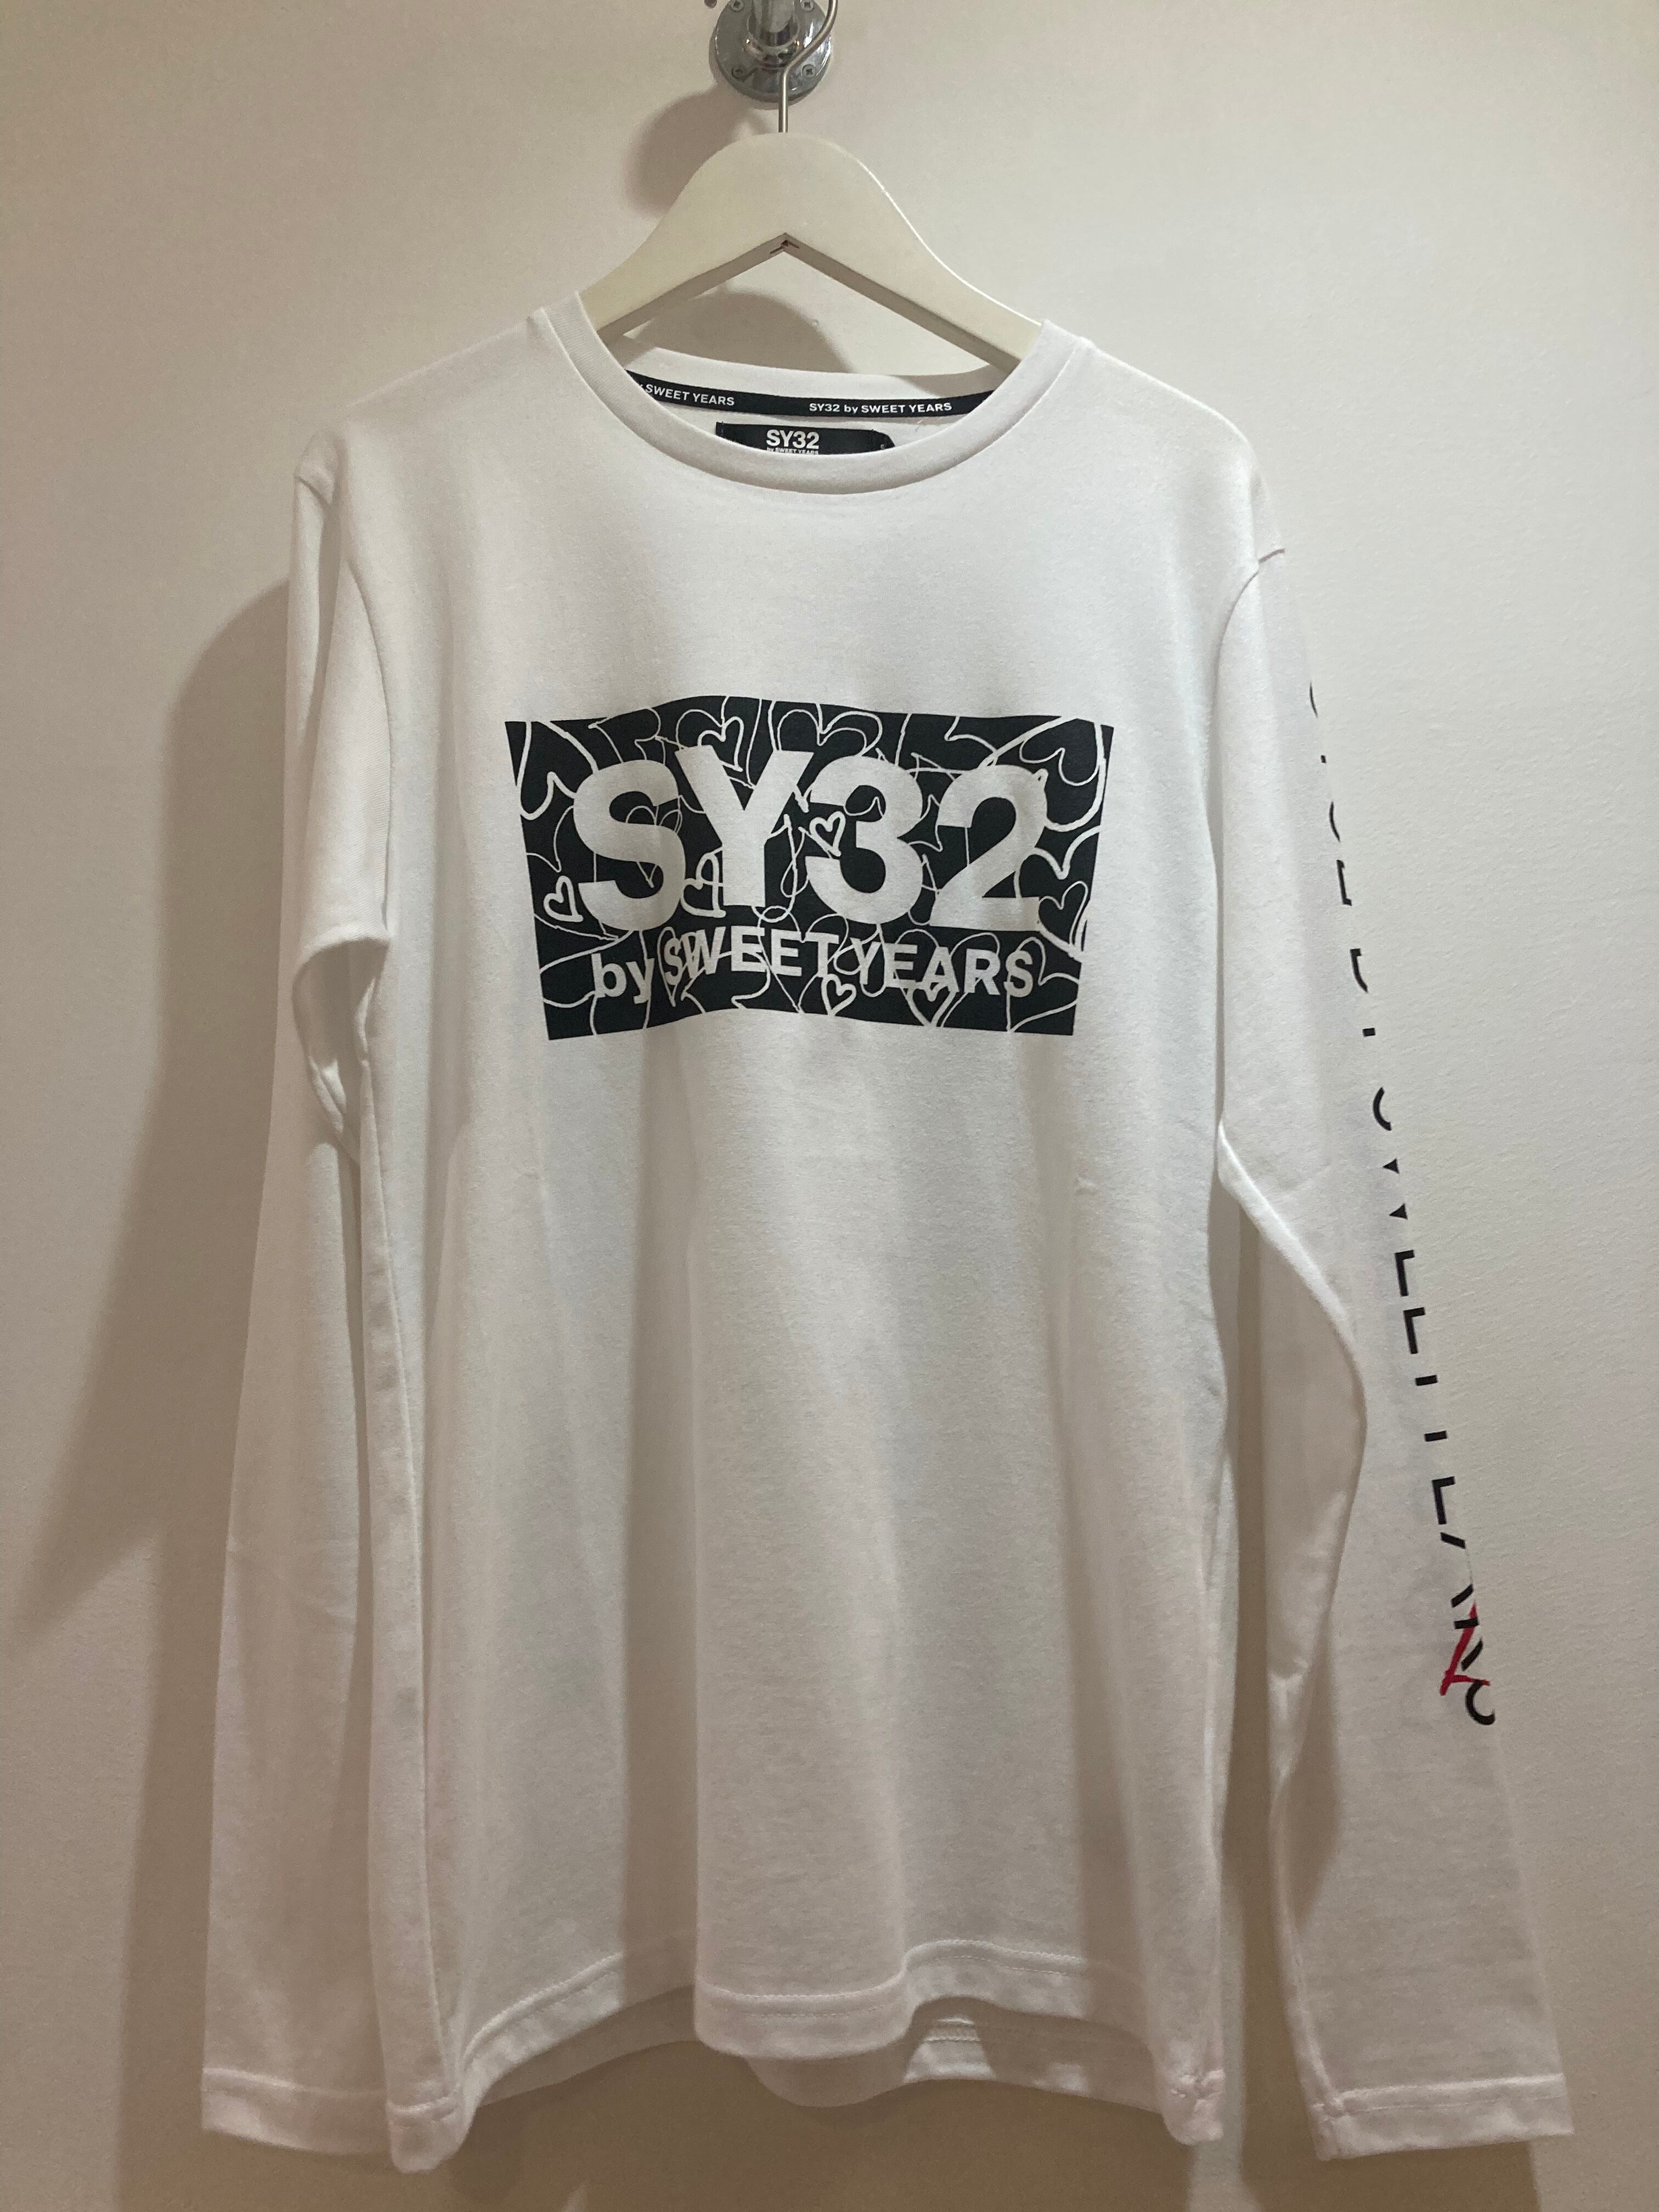 SY32 by SWWT YEARS /ロング Tシャツ ホワイト×ブラック文字